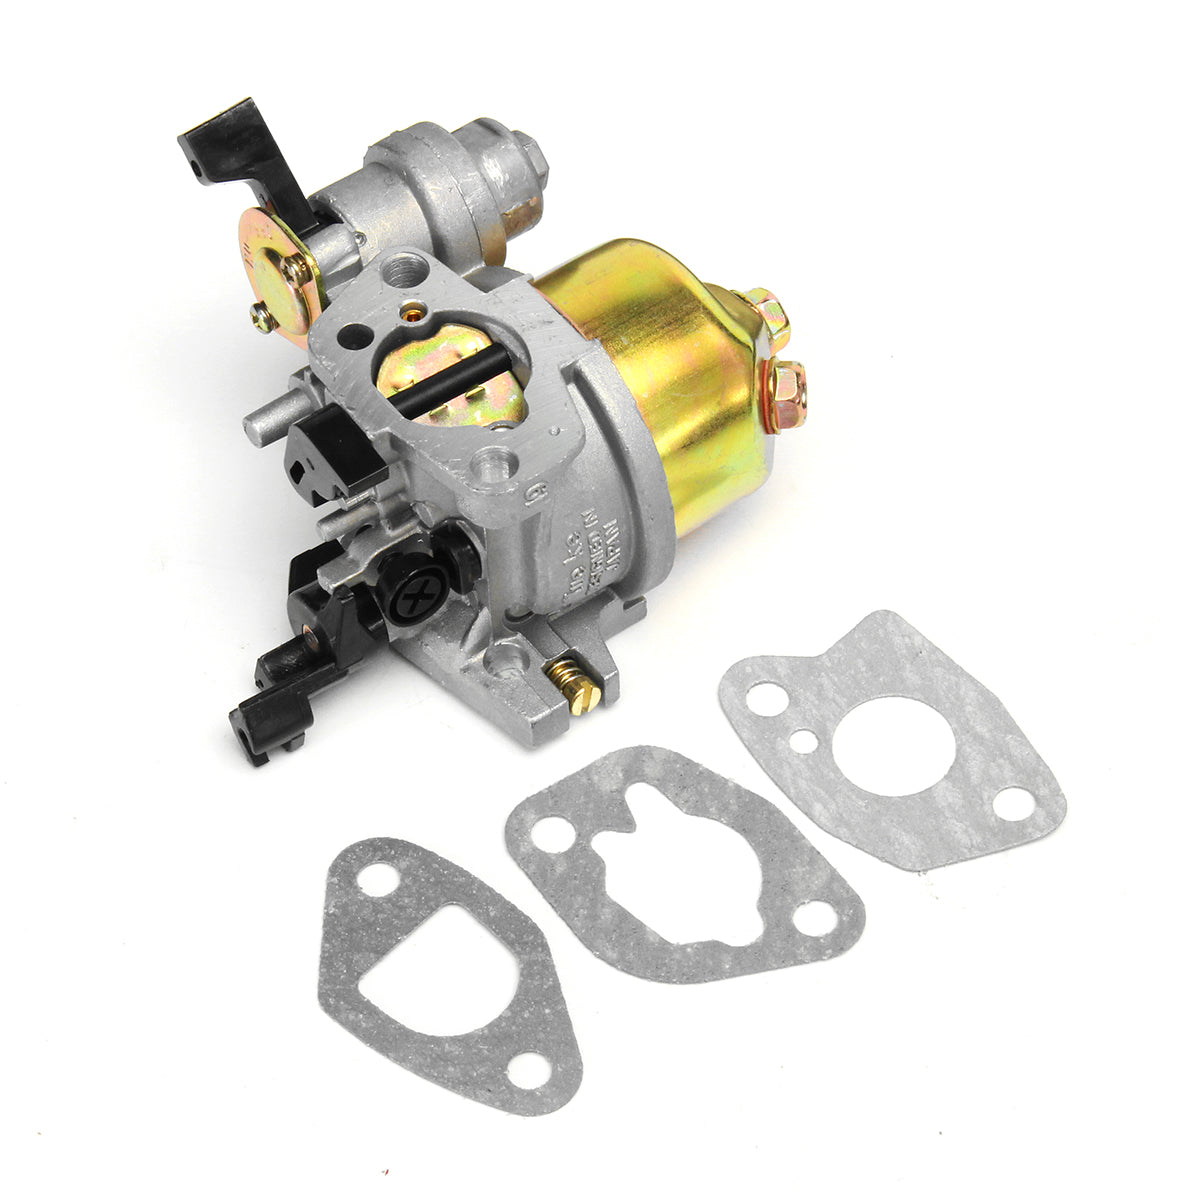 Dark Khaki Recoil Carburetors Ignition Coil Spark Plug Air Filter Gas For Honda GX160 GX200